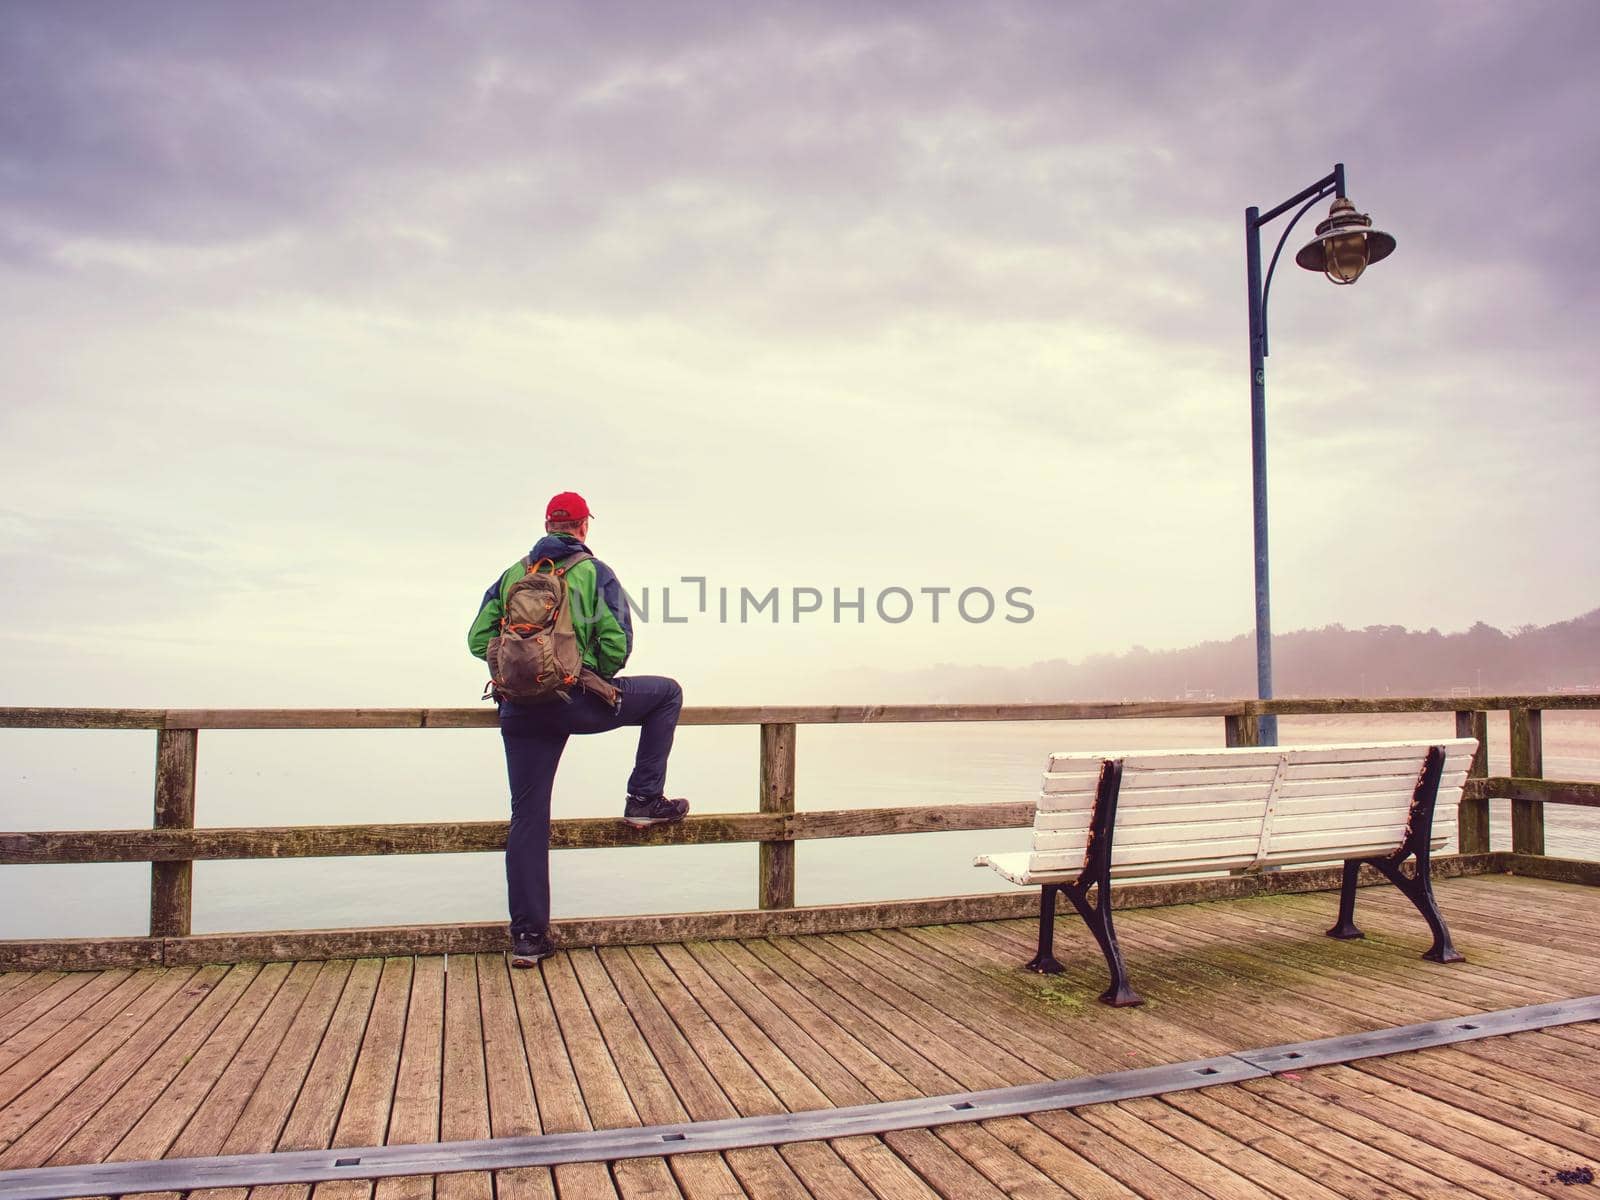 Thinking man on wooden pier on the background of sea hidden in mist.